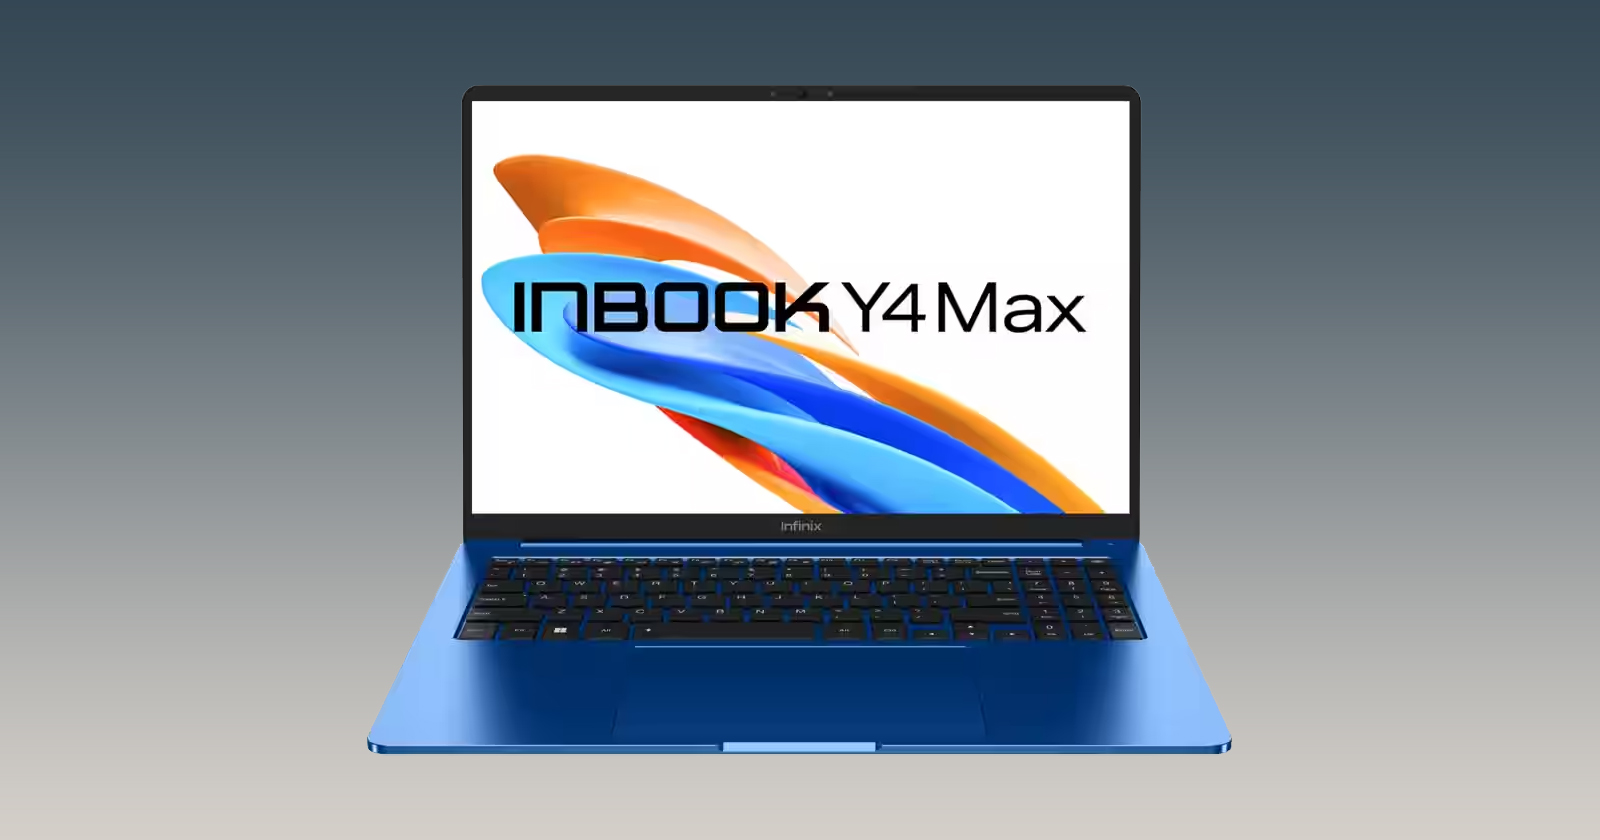 infinix-inbook-y4-max-tanitildi-1